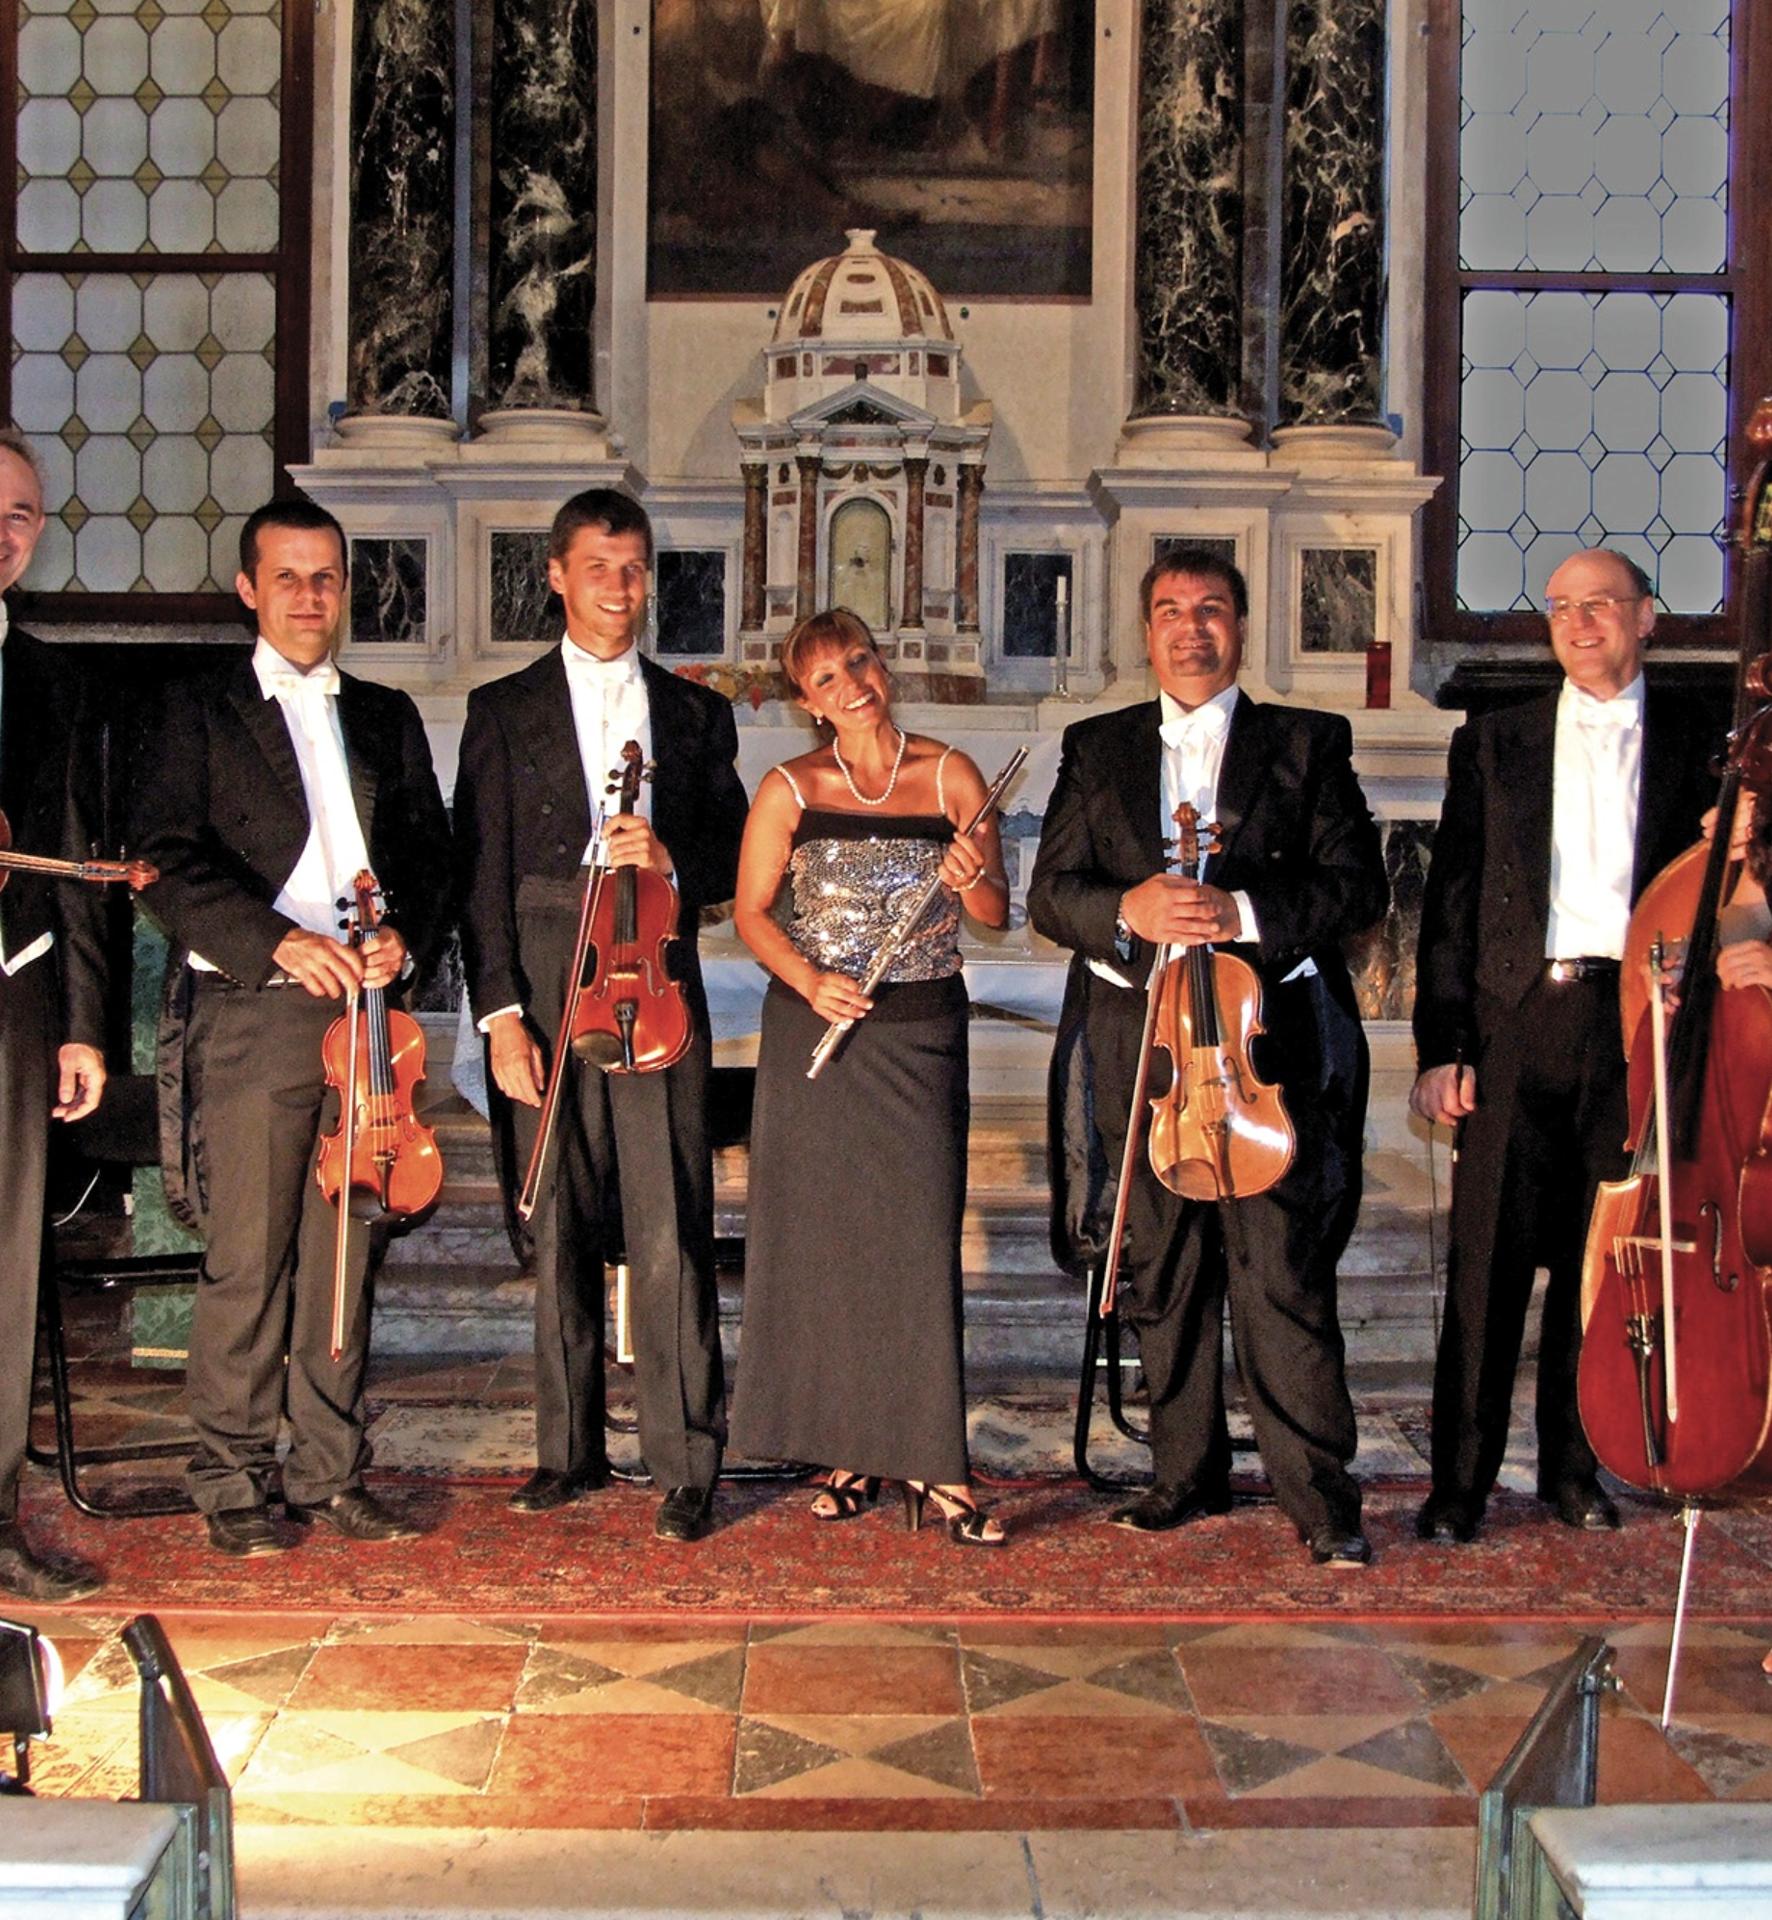 Concerto de música clássica no centro de Veneza